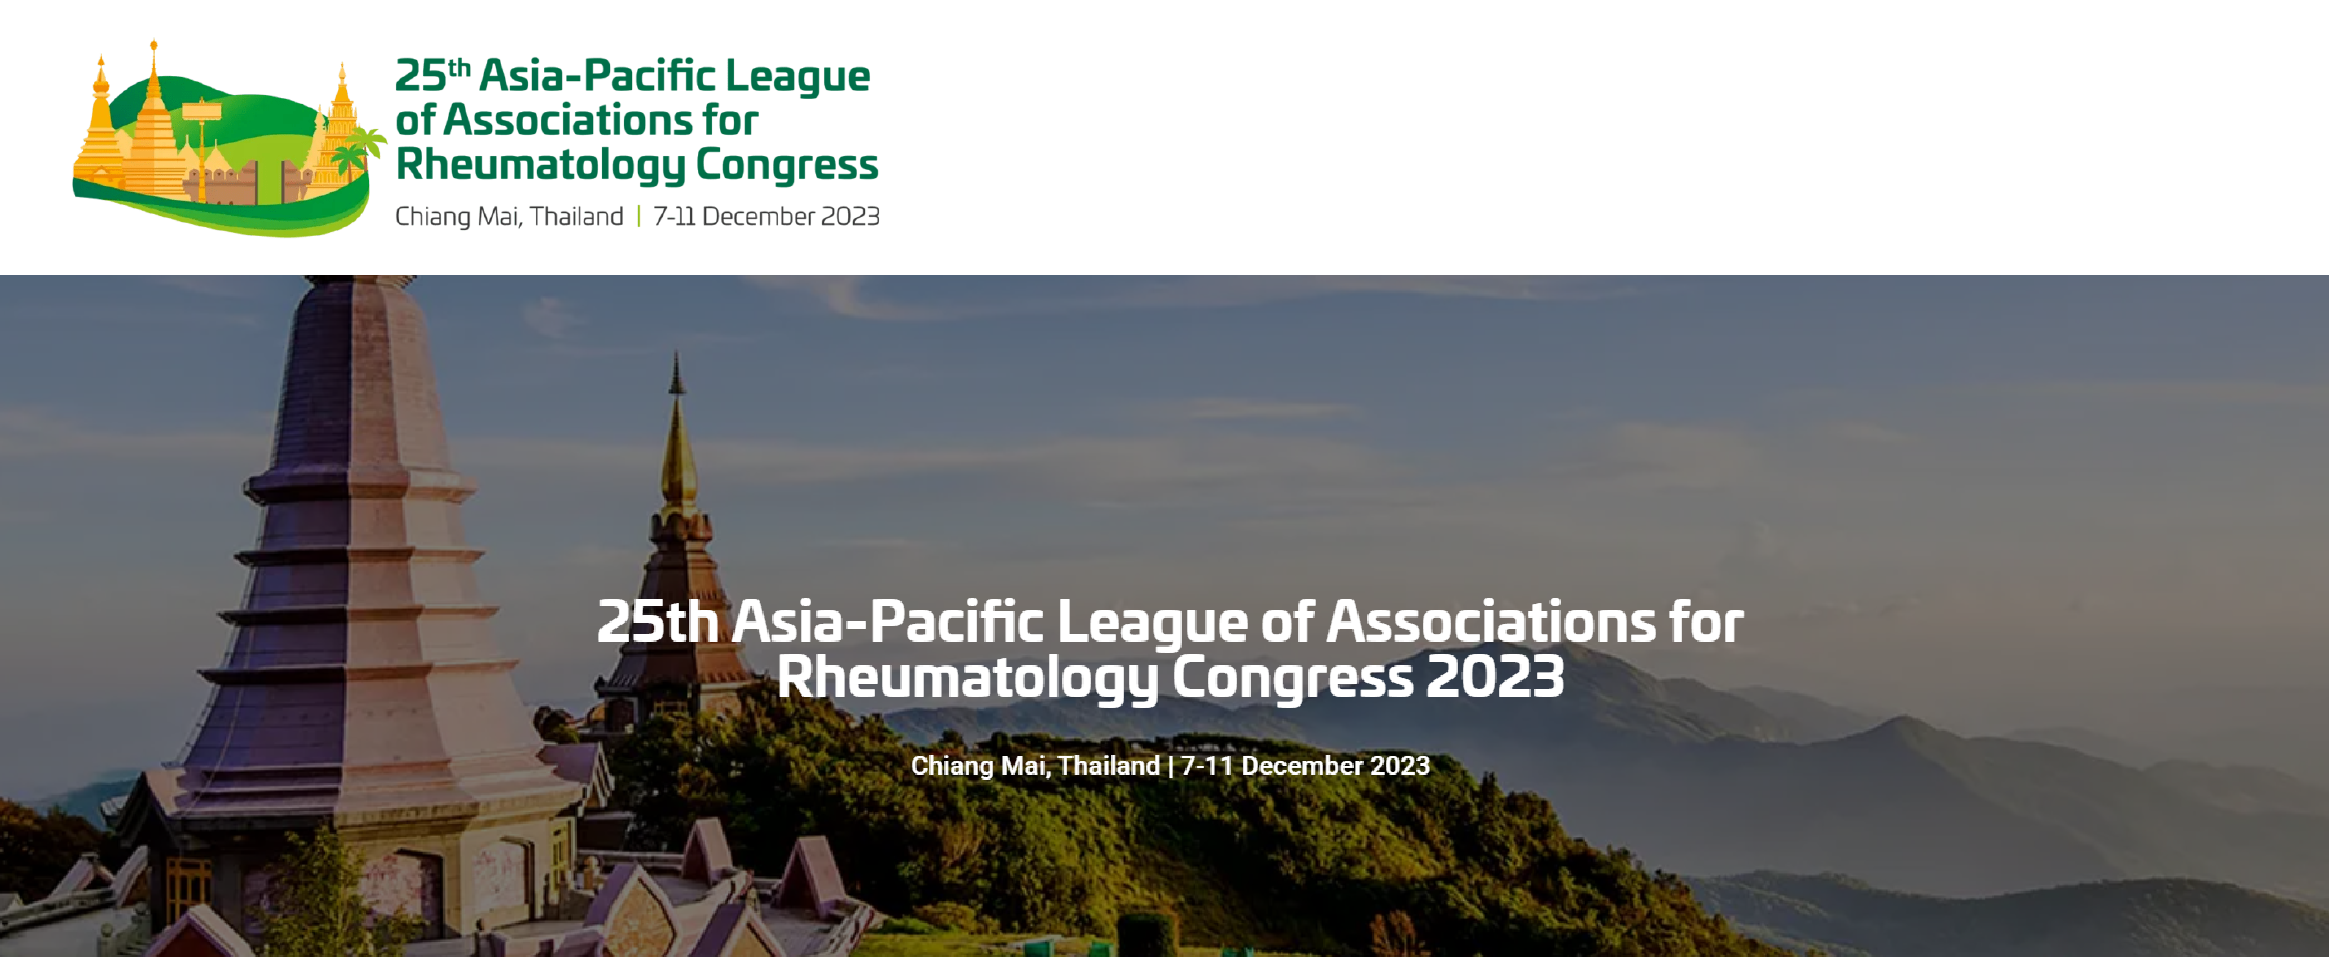 25th Asia-Pacific League of Associations for Rheumatology Congress - APLAR 2023